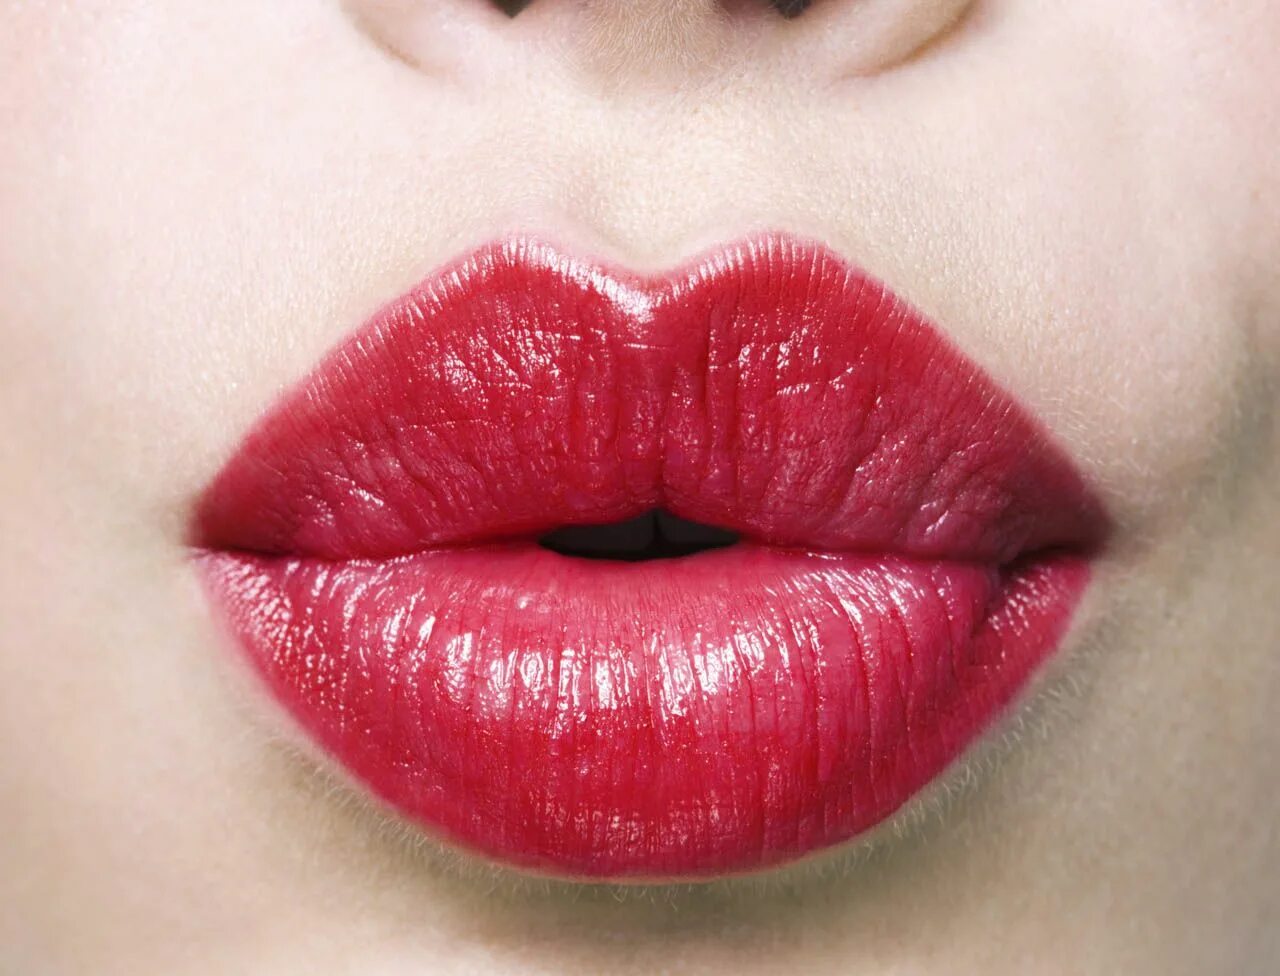 I love lips. Красивые губы. Красивые женские губы. Красивые губки. Губки женские.